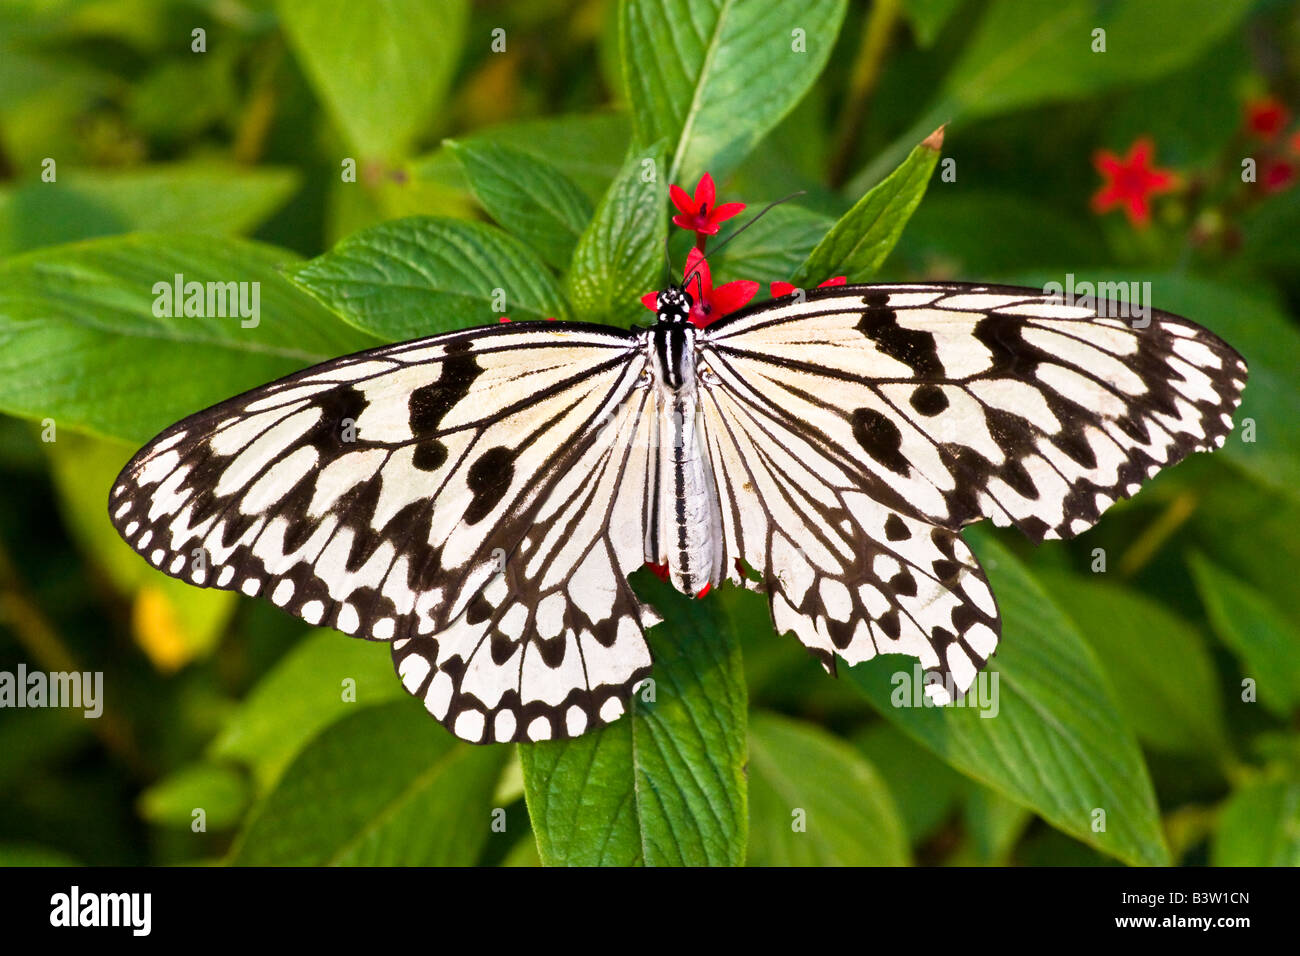 Idea leuconoe clara ricepaper wing butterfly Endemic Species Research Center, Jiji, Nantou, Taiwan, Republic of China (ROC) Stock Photo